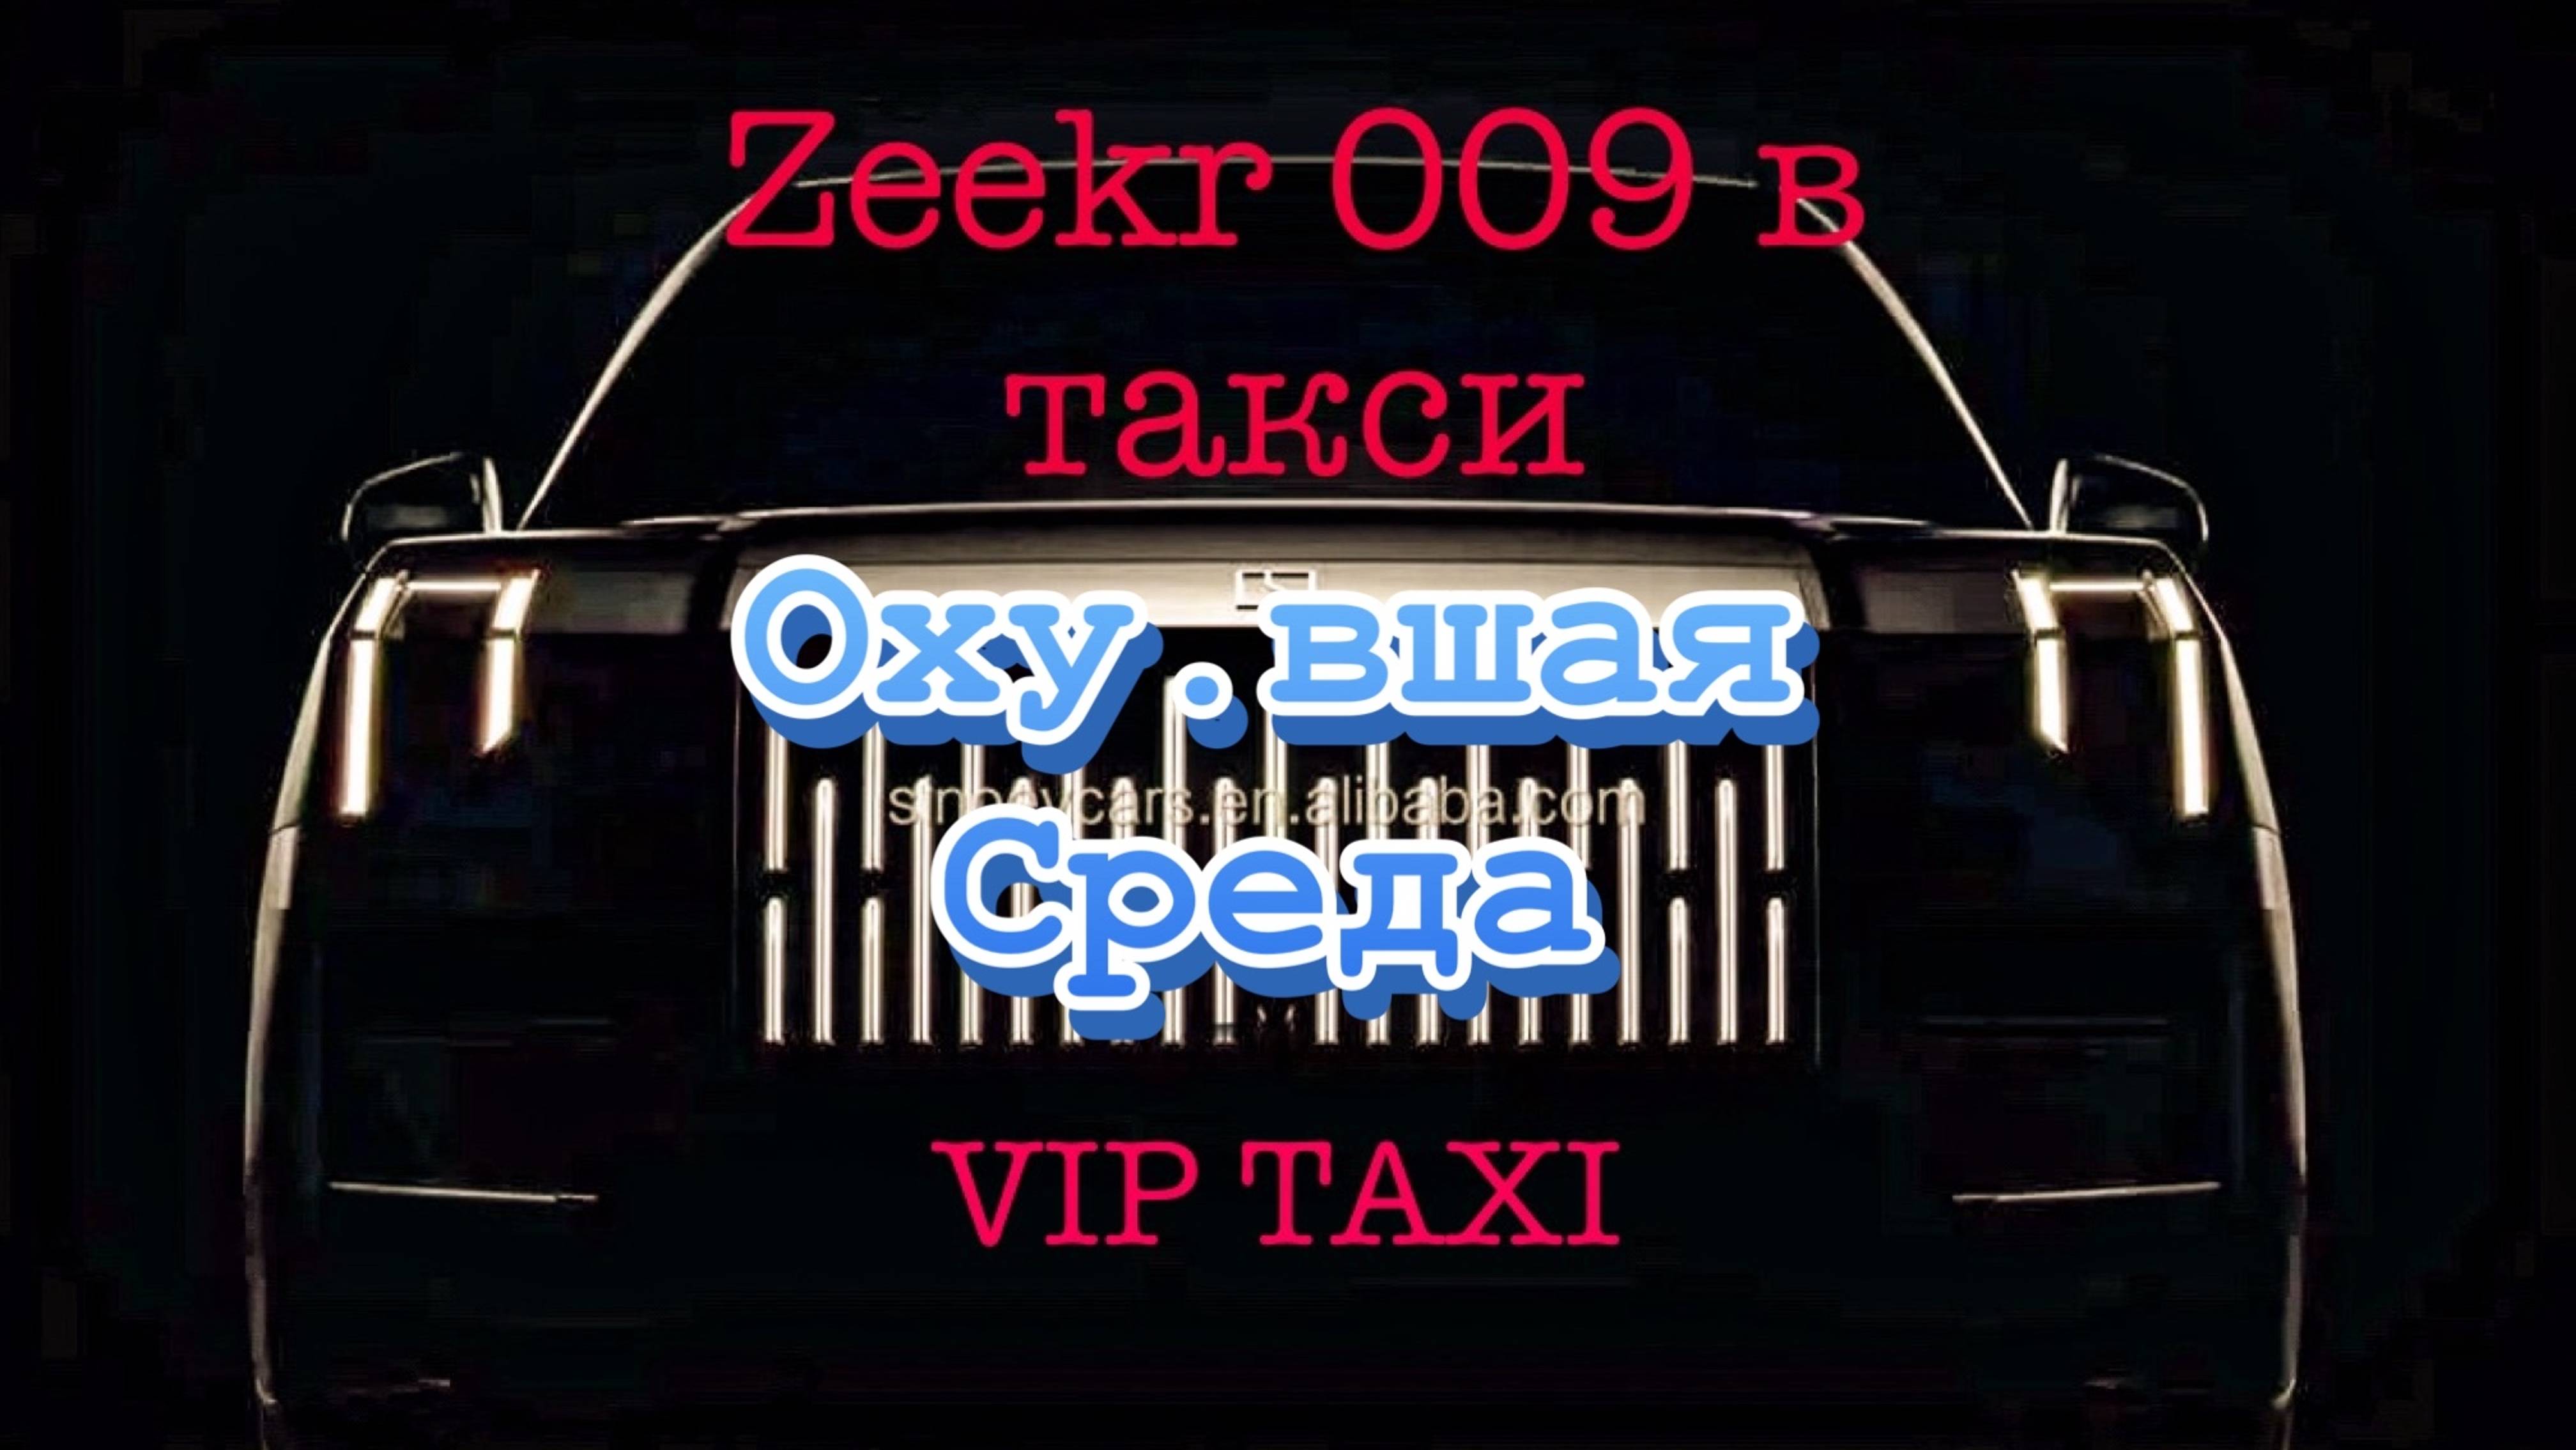 Лютейшая Среда в vip такси /таксую на zeekr009/elite taxi/тариф элит/рабочая смена/яндекс такси